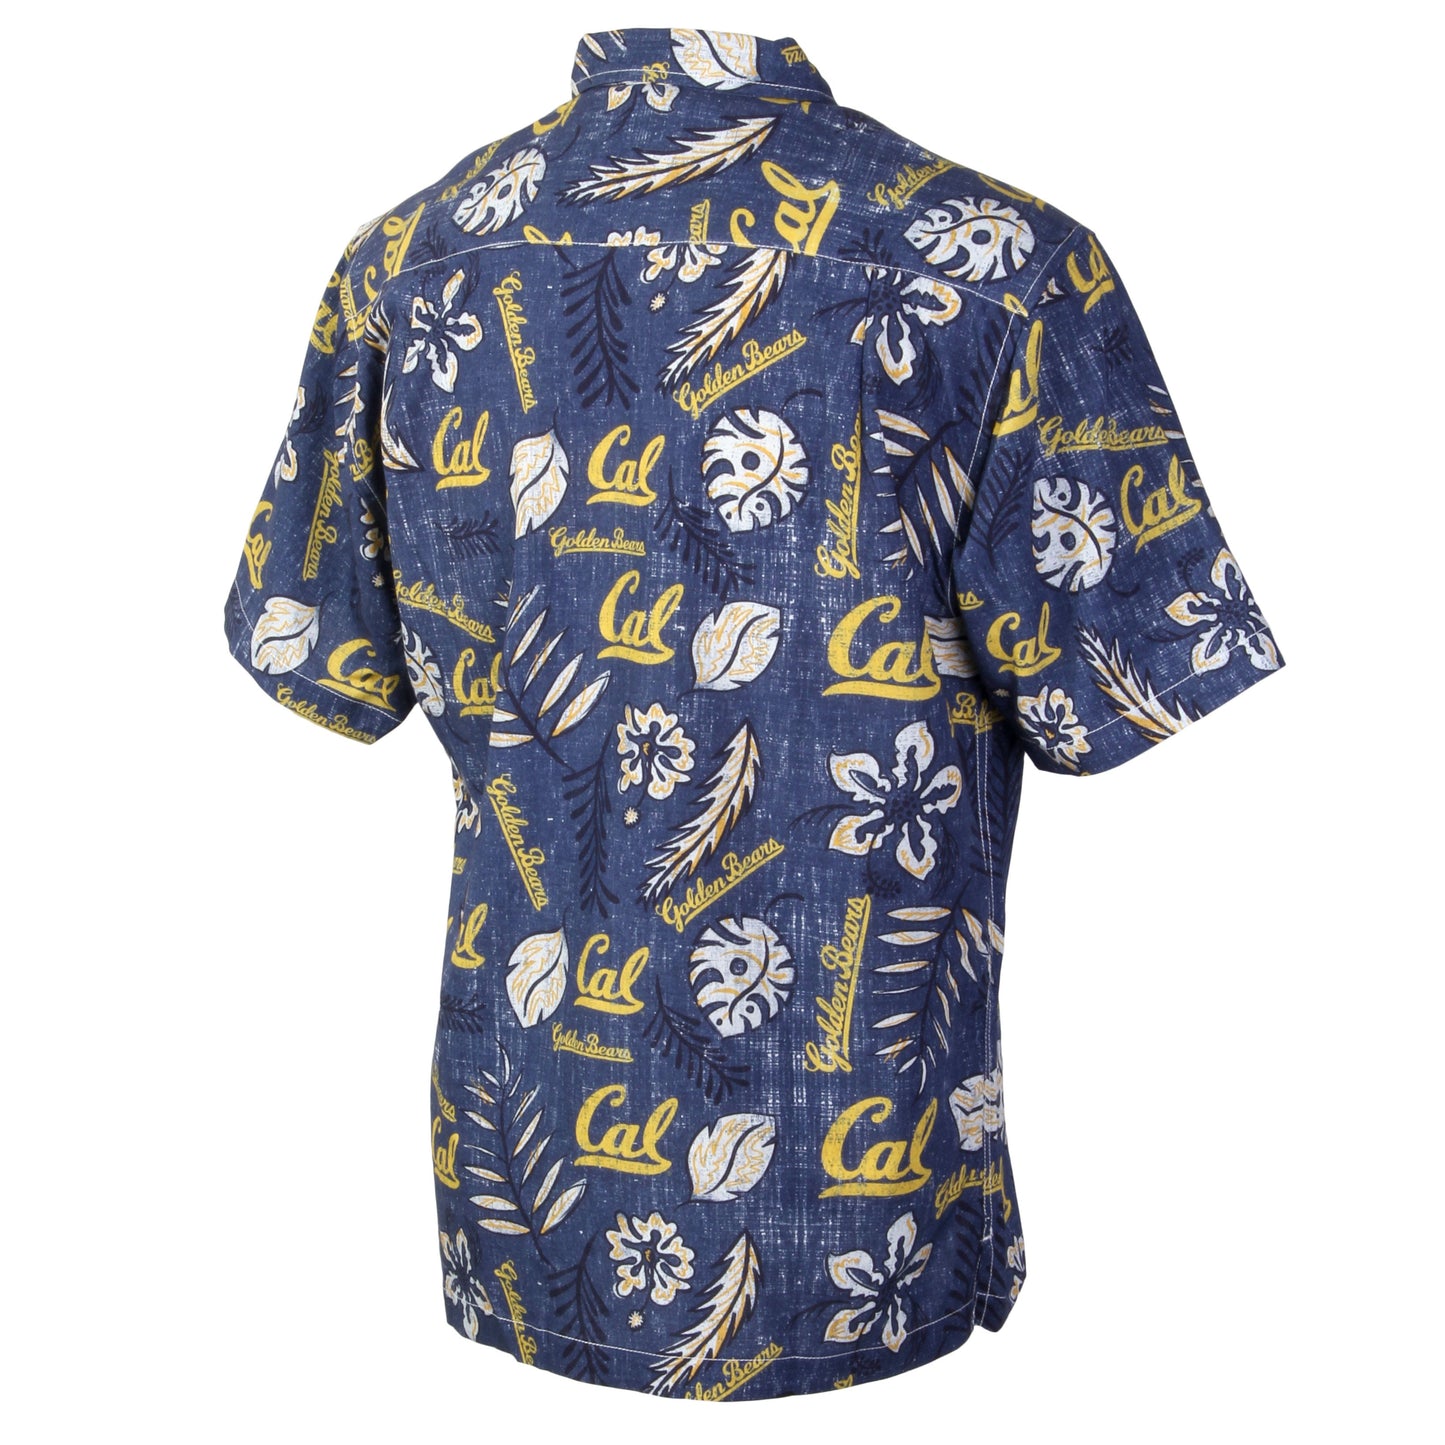 California Golden Bears Men's Vintage Floral Shirt